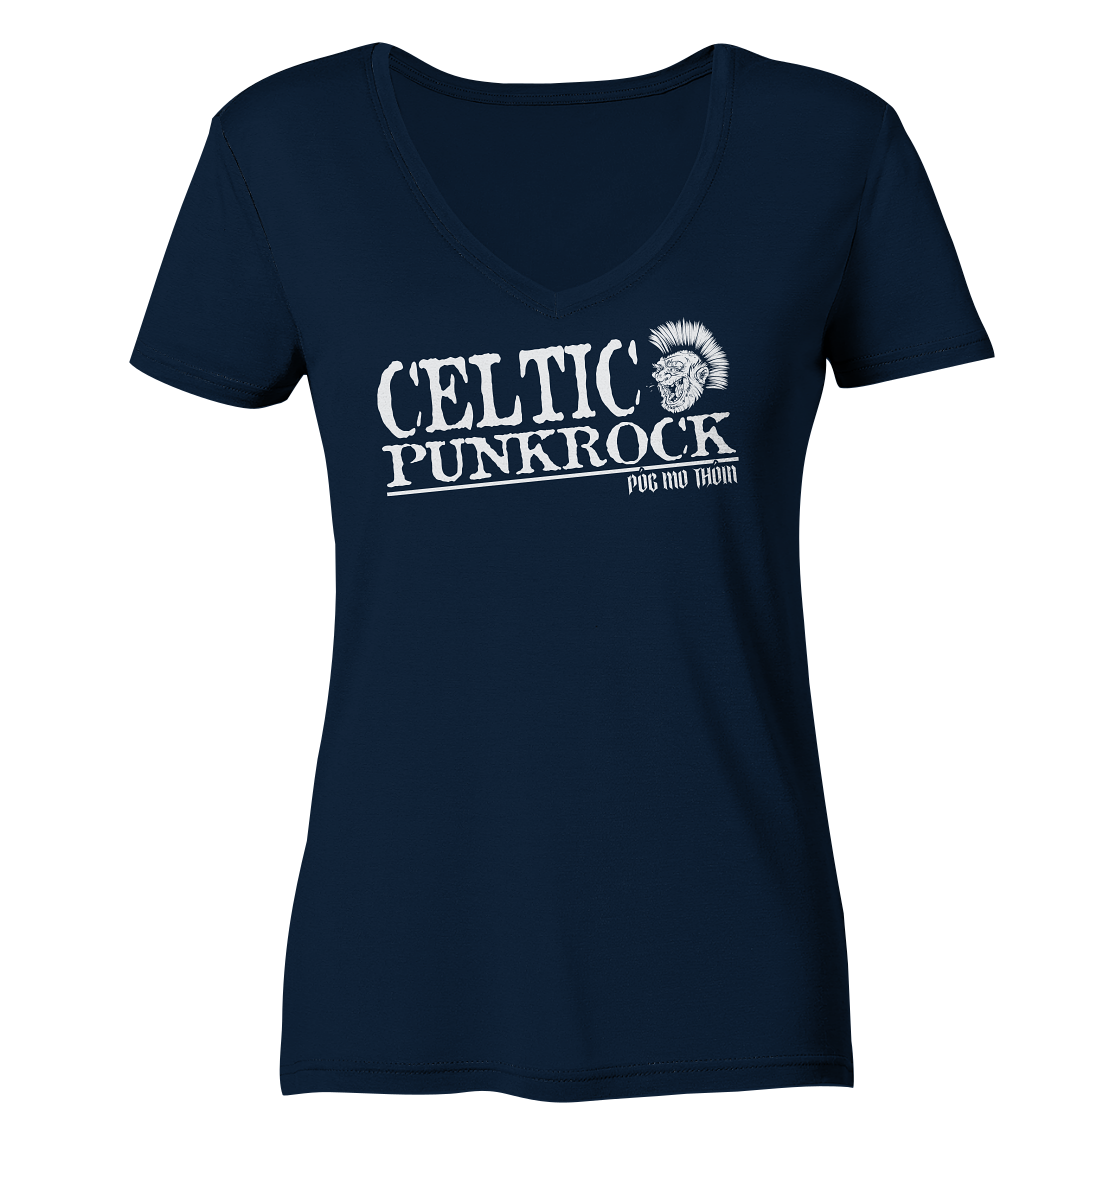 Póg Mo Thóin Streetwear "Celtic Punkrock" - Ladies V-Neck Shirt